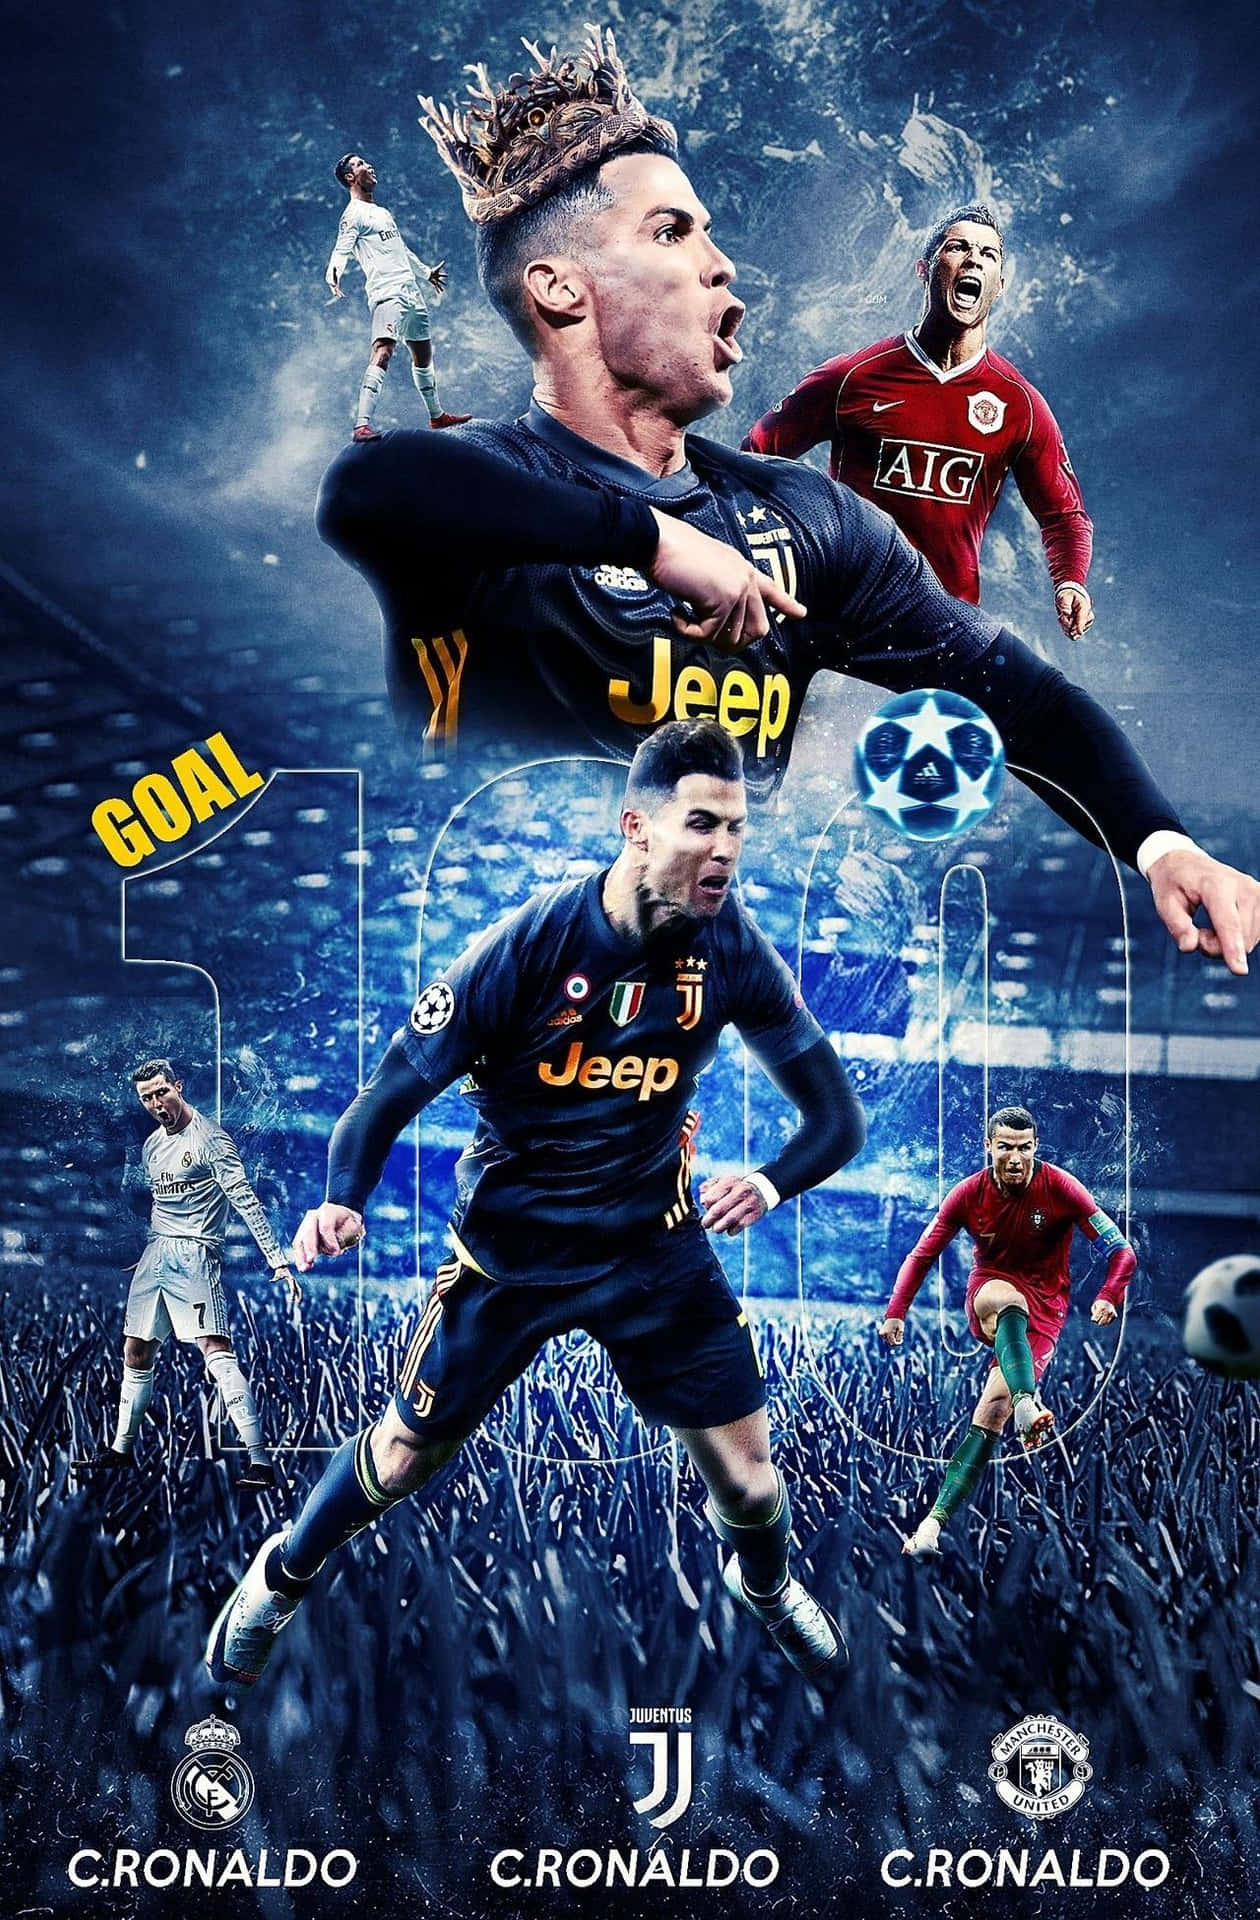 Cristiano Ronaldo Career Highlights Collage Wallpaper